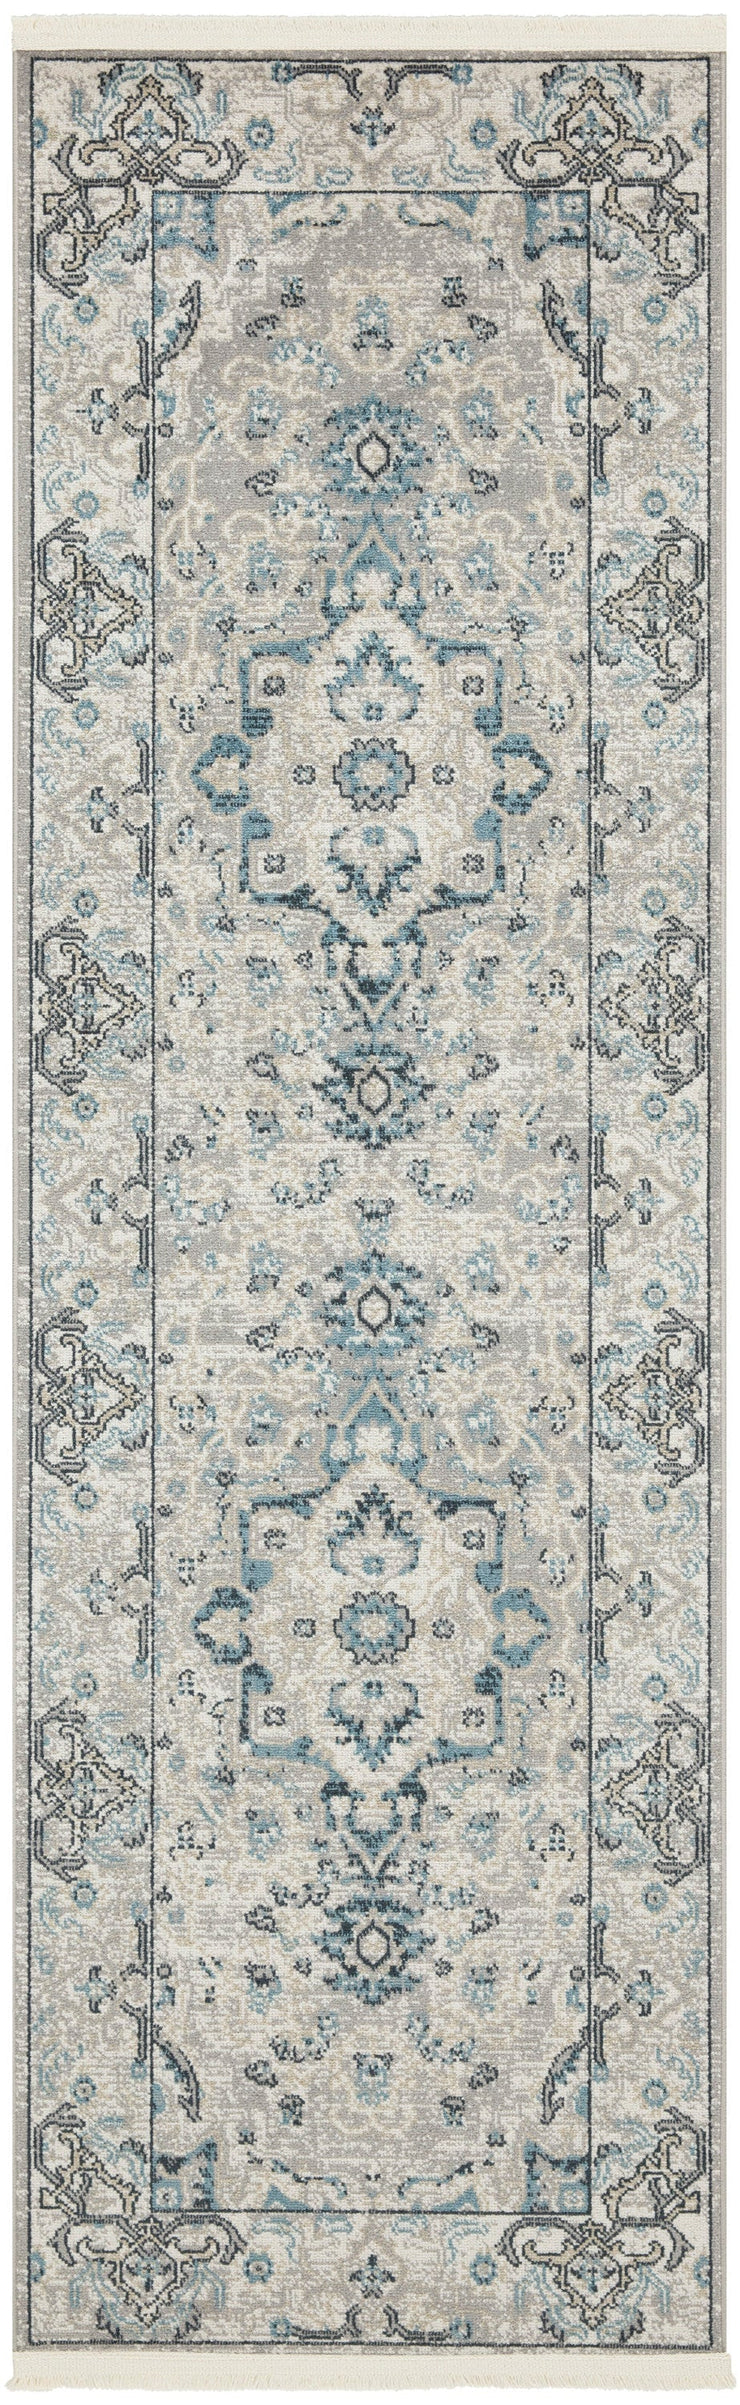 carina grey blue rug by nourison 99446880727 redo 2